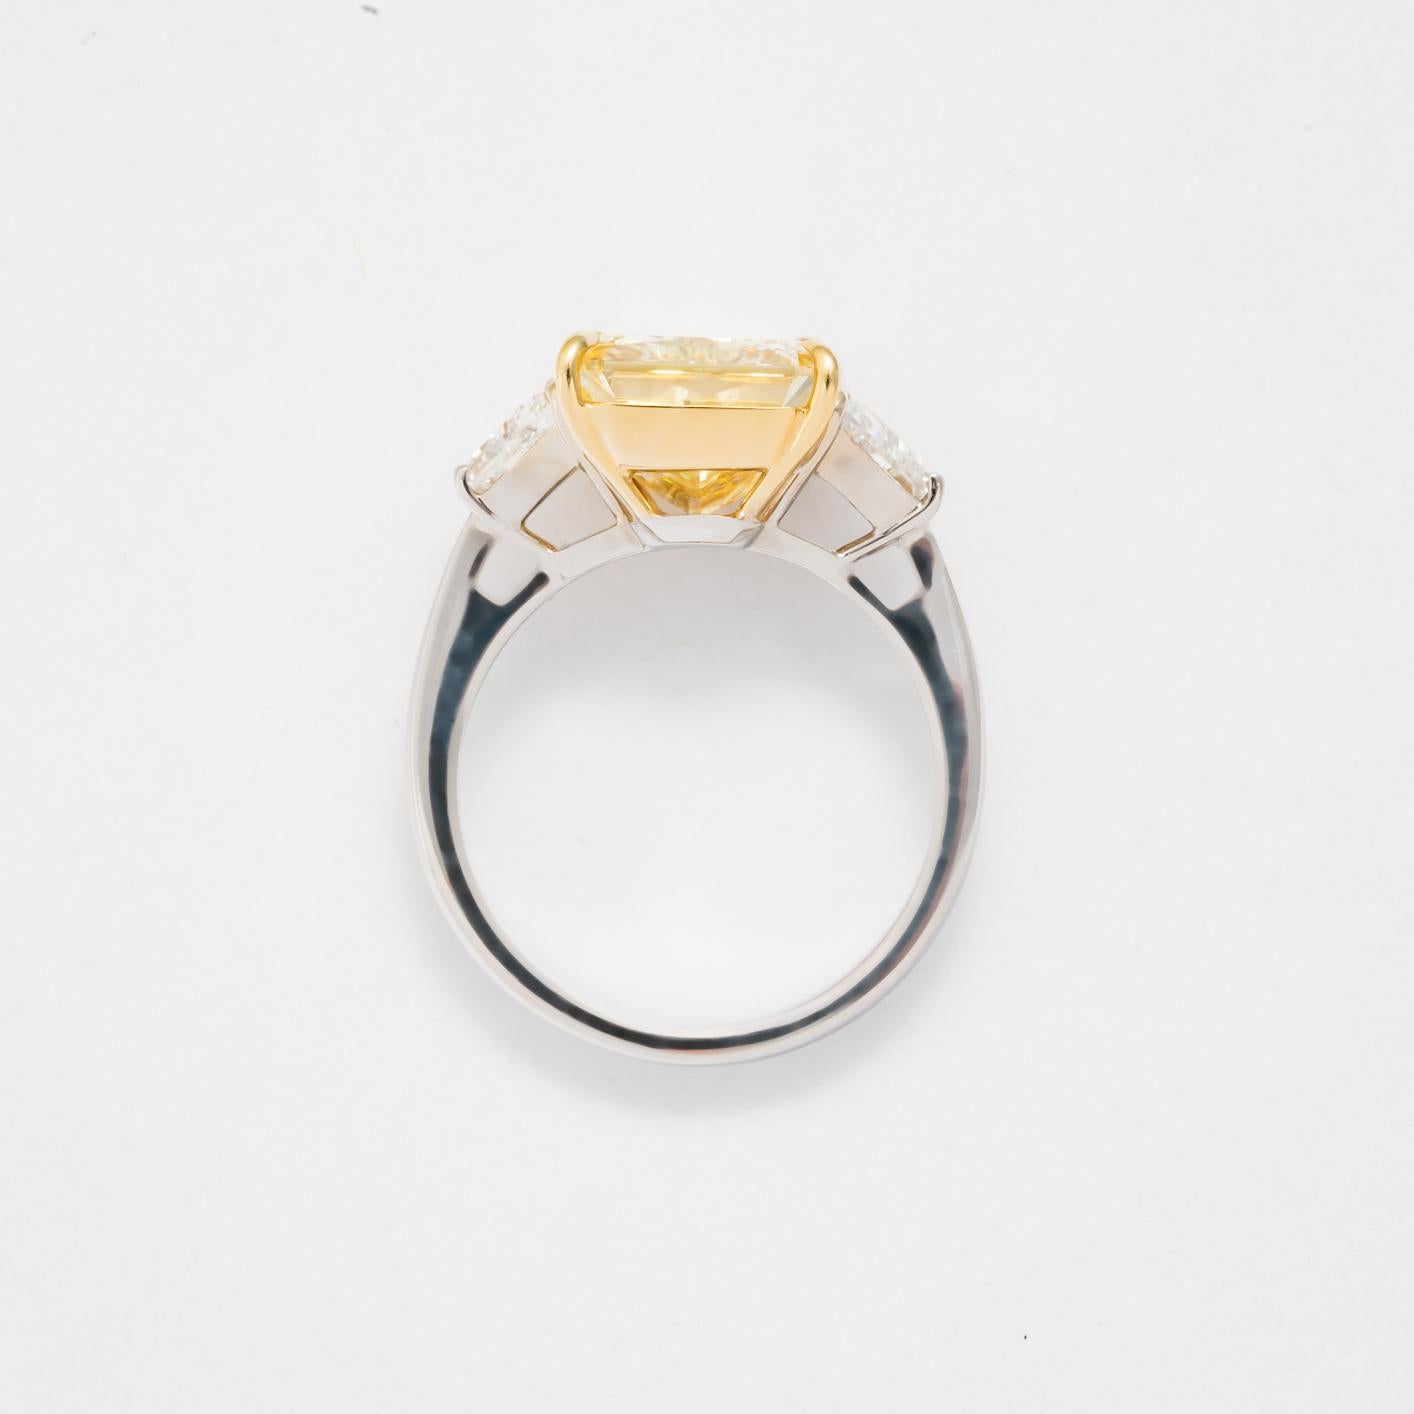 radiant cut engagement rings